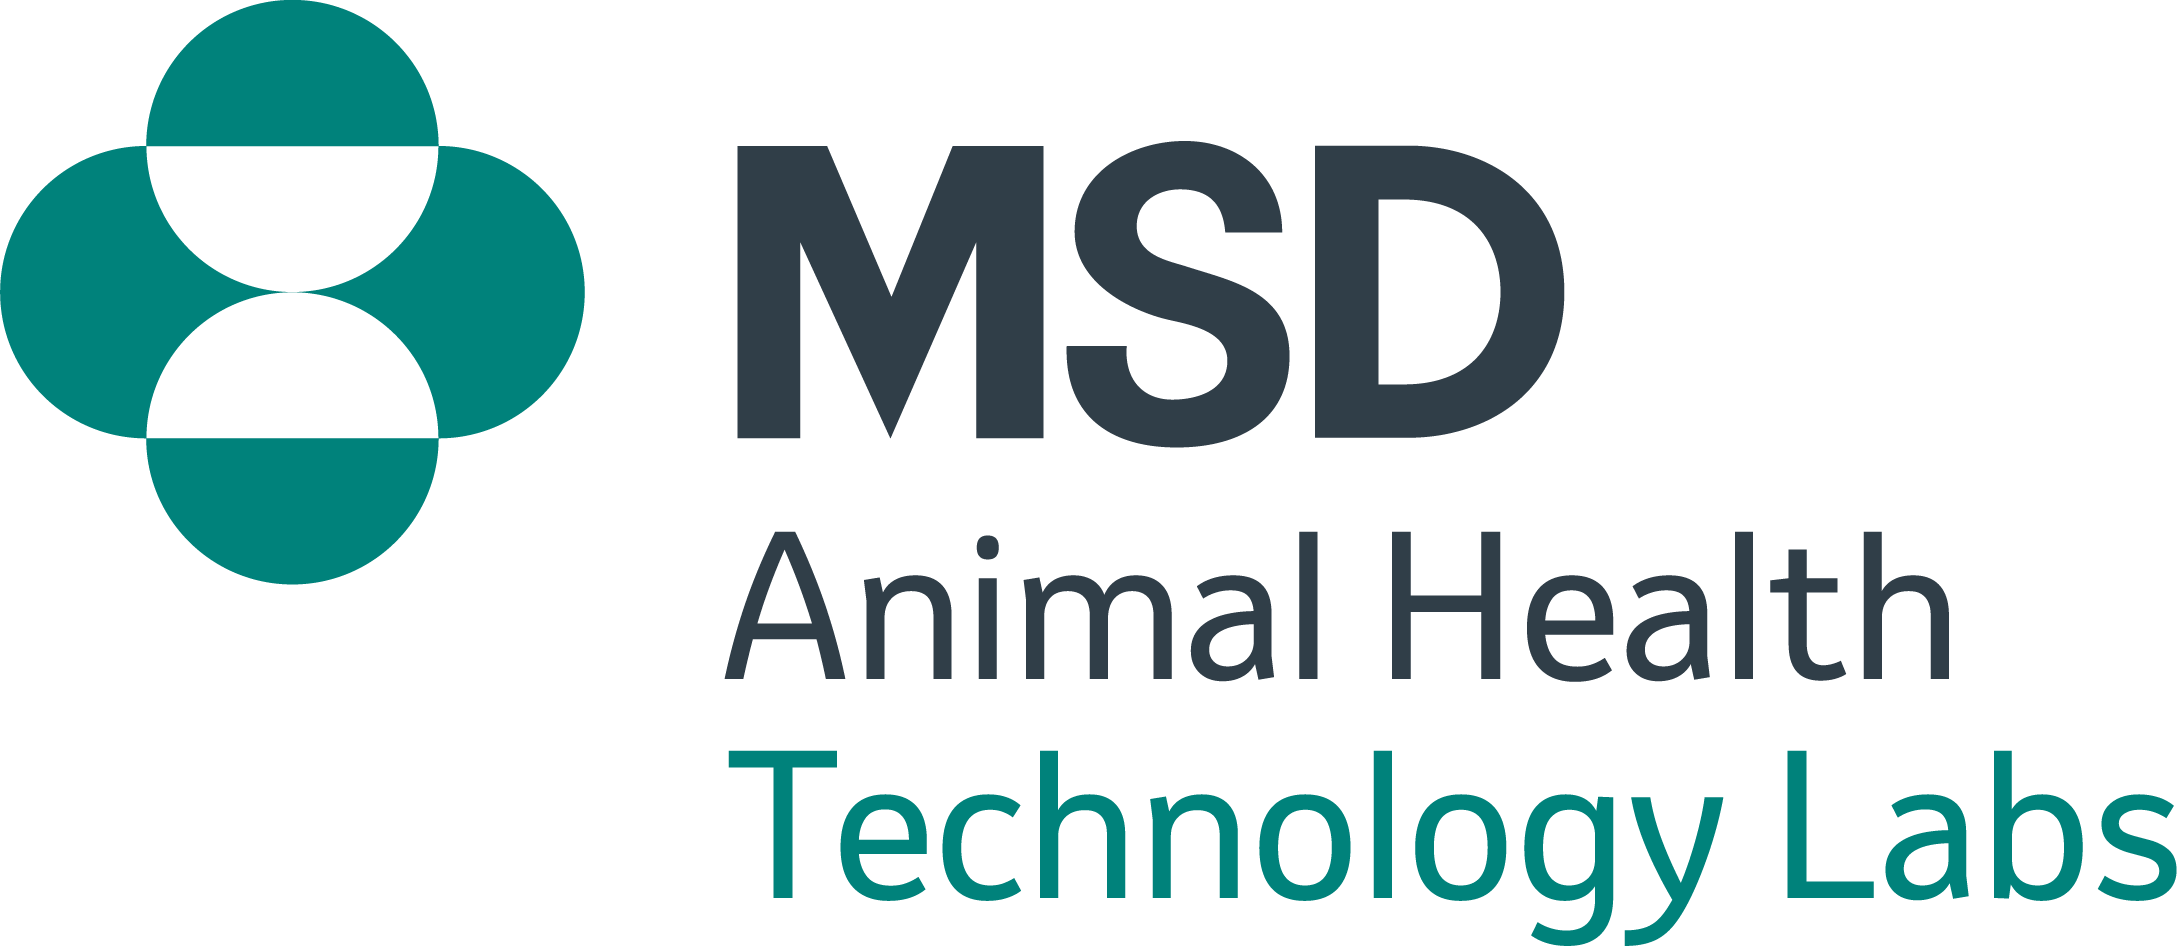 MSD Animal Health Technology Labs